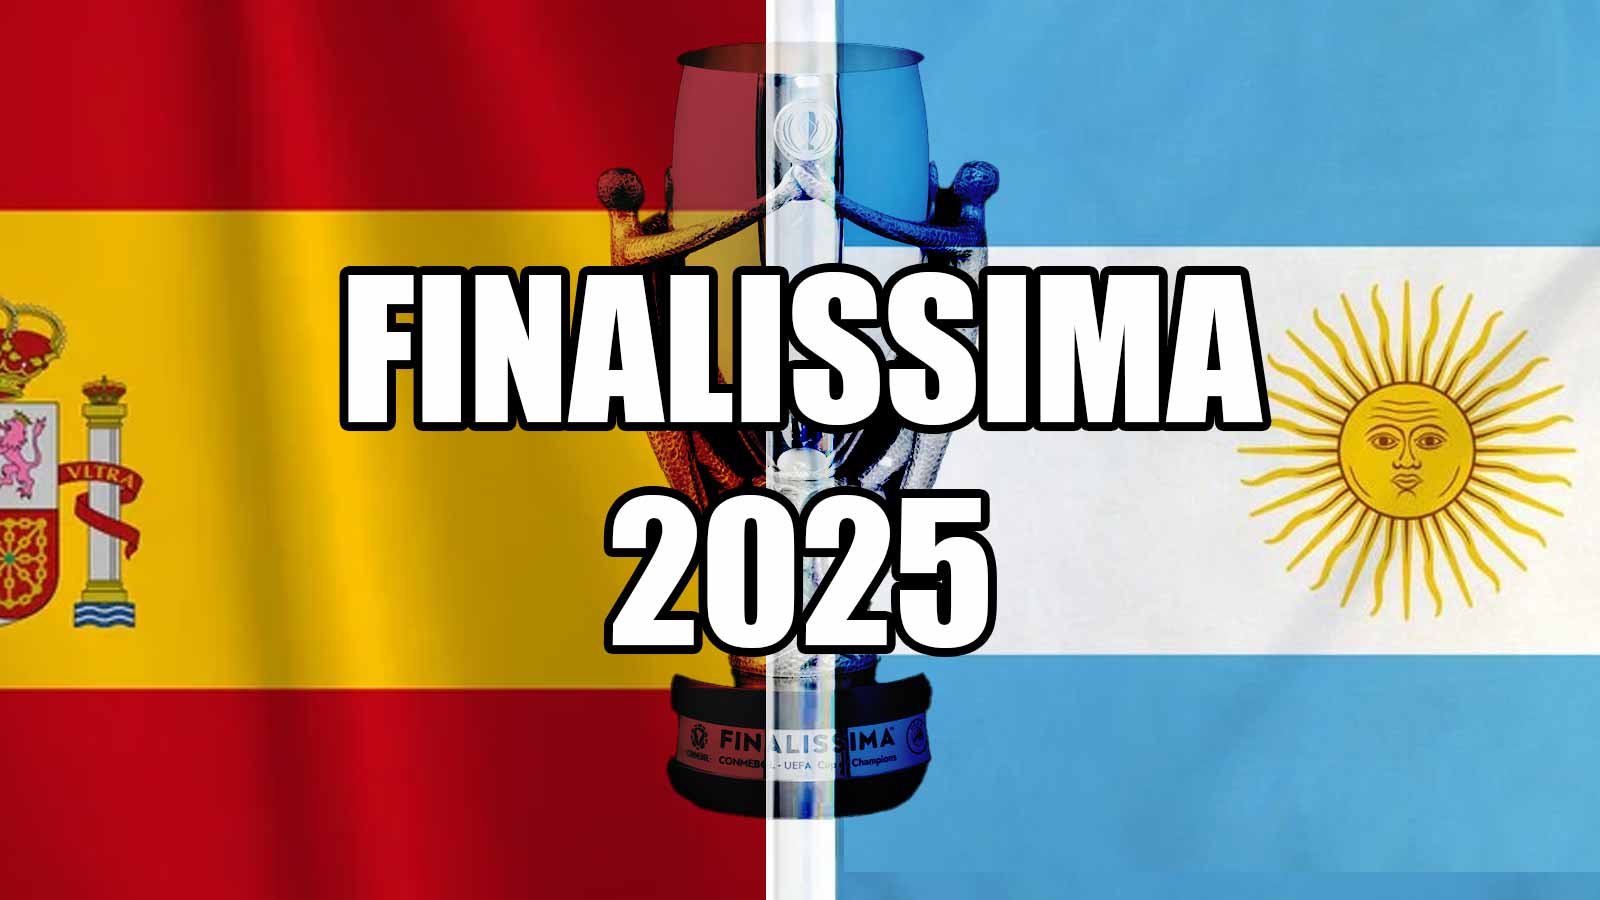 Finalissima 2025 Spain vs Argentina